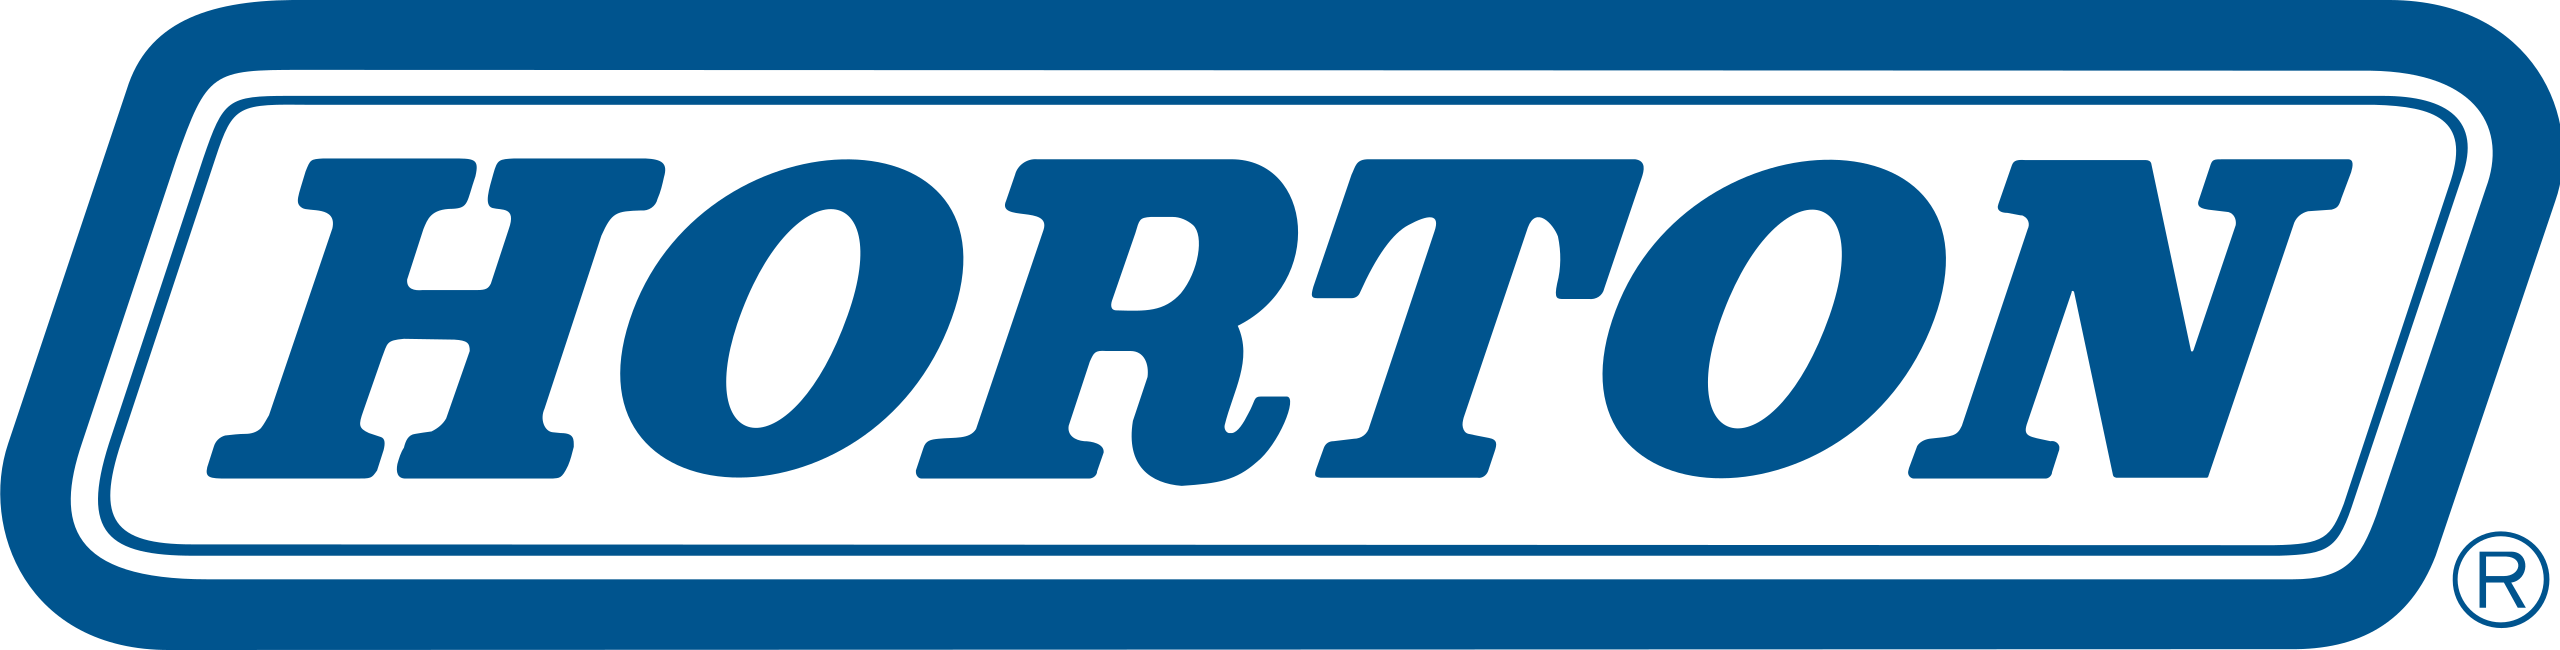 Hortons Inc logo